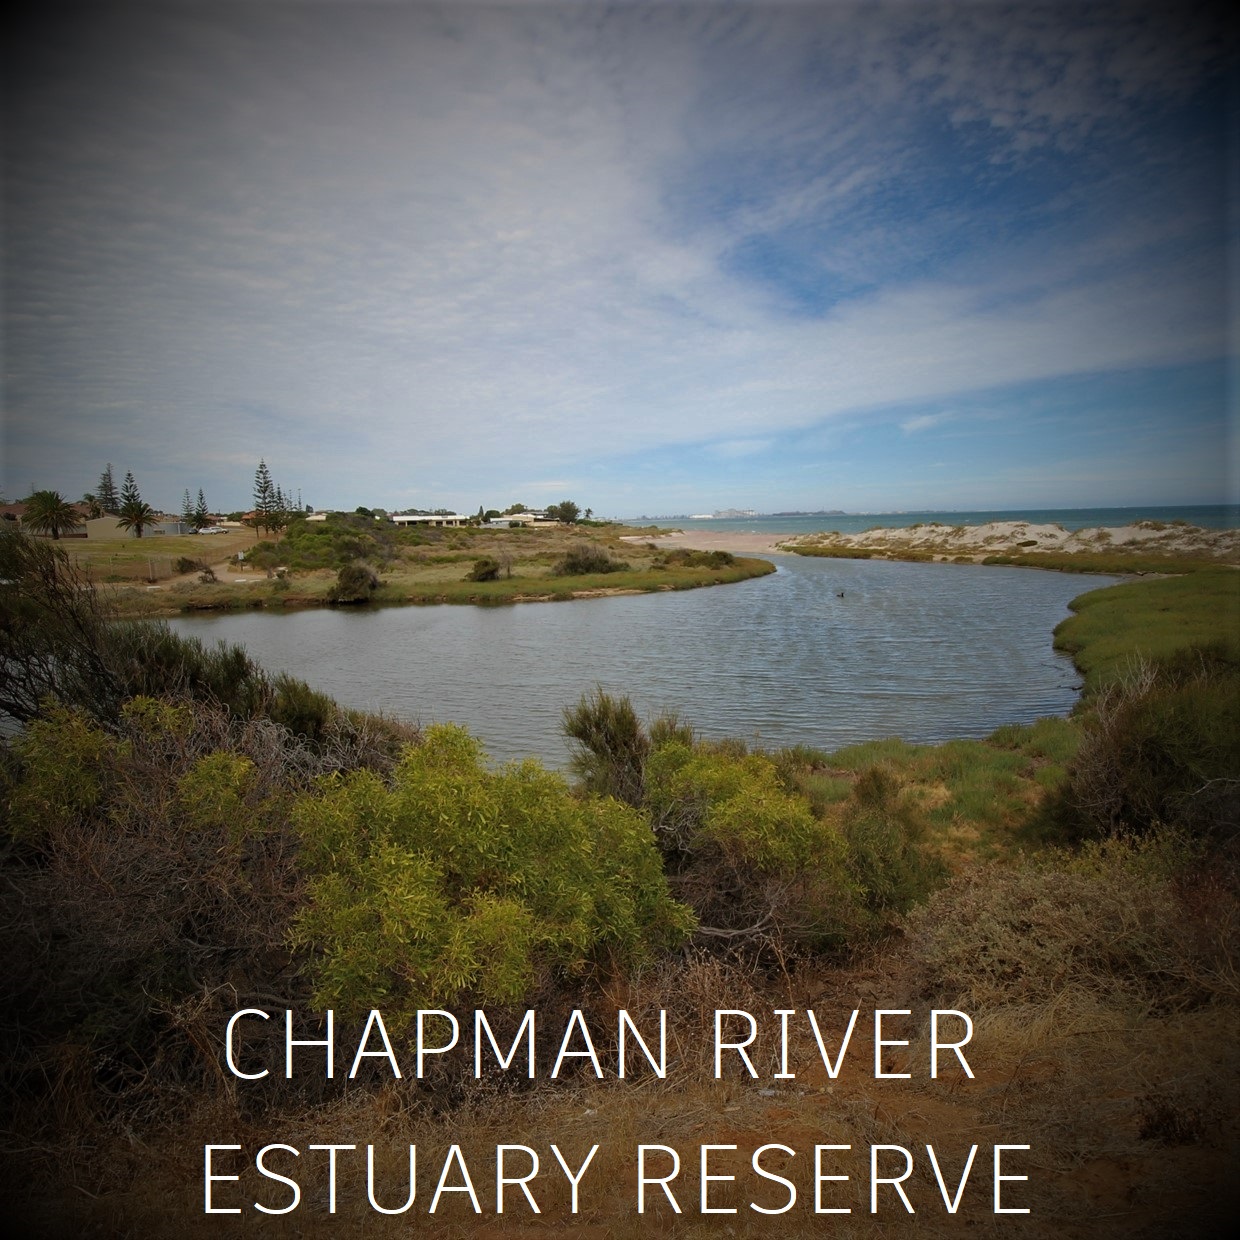 Chapman River Estuary Reserve